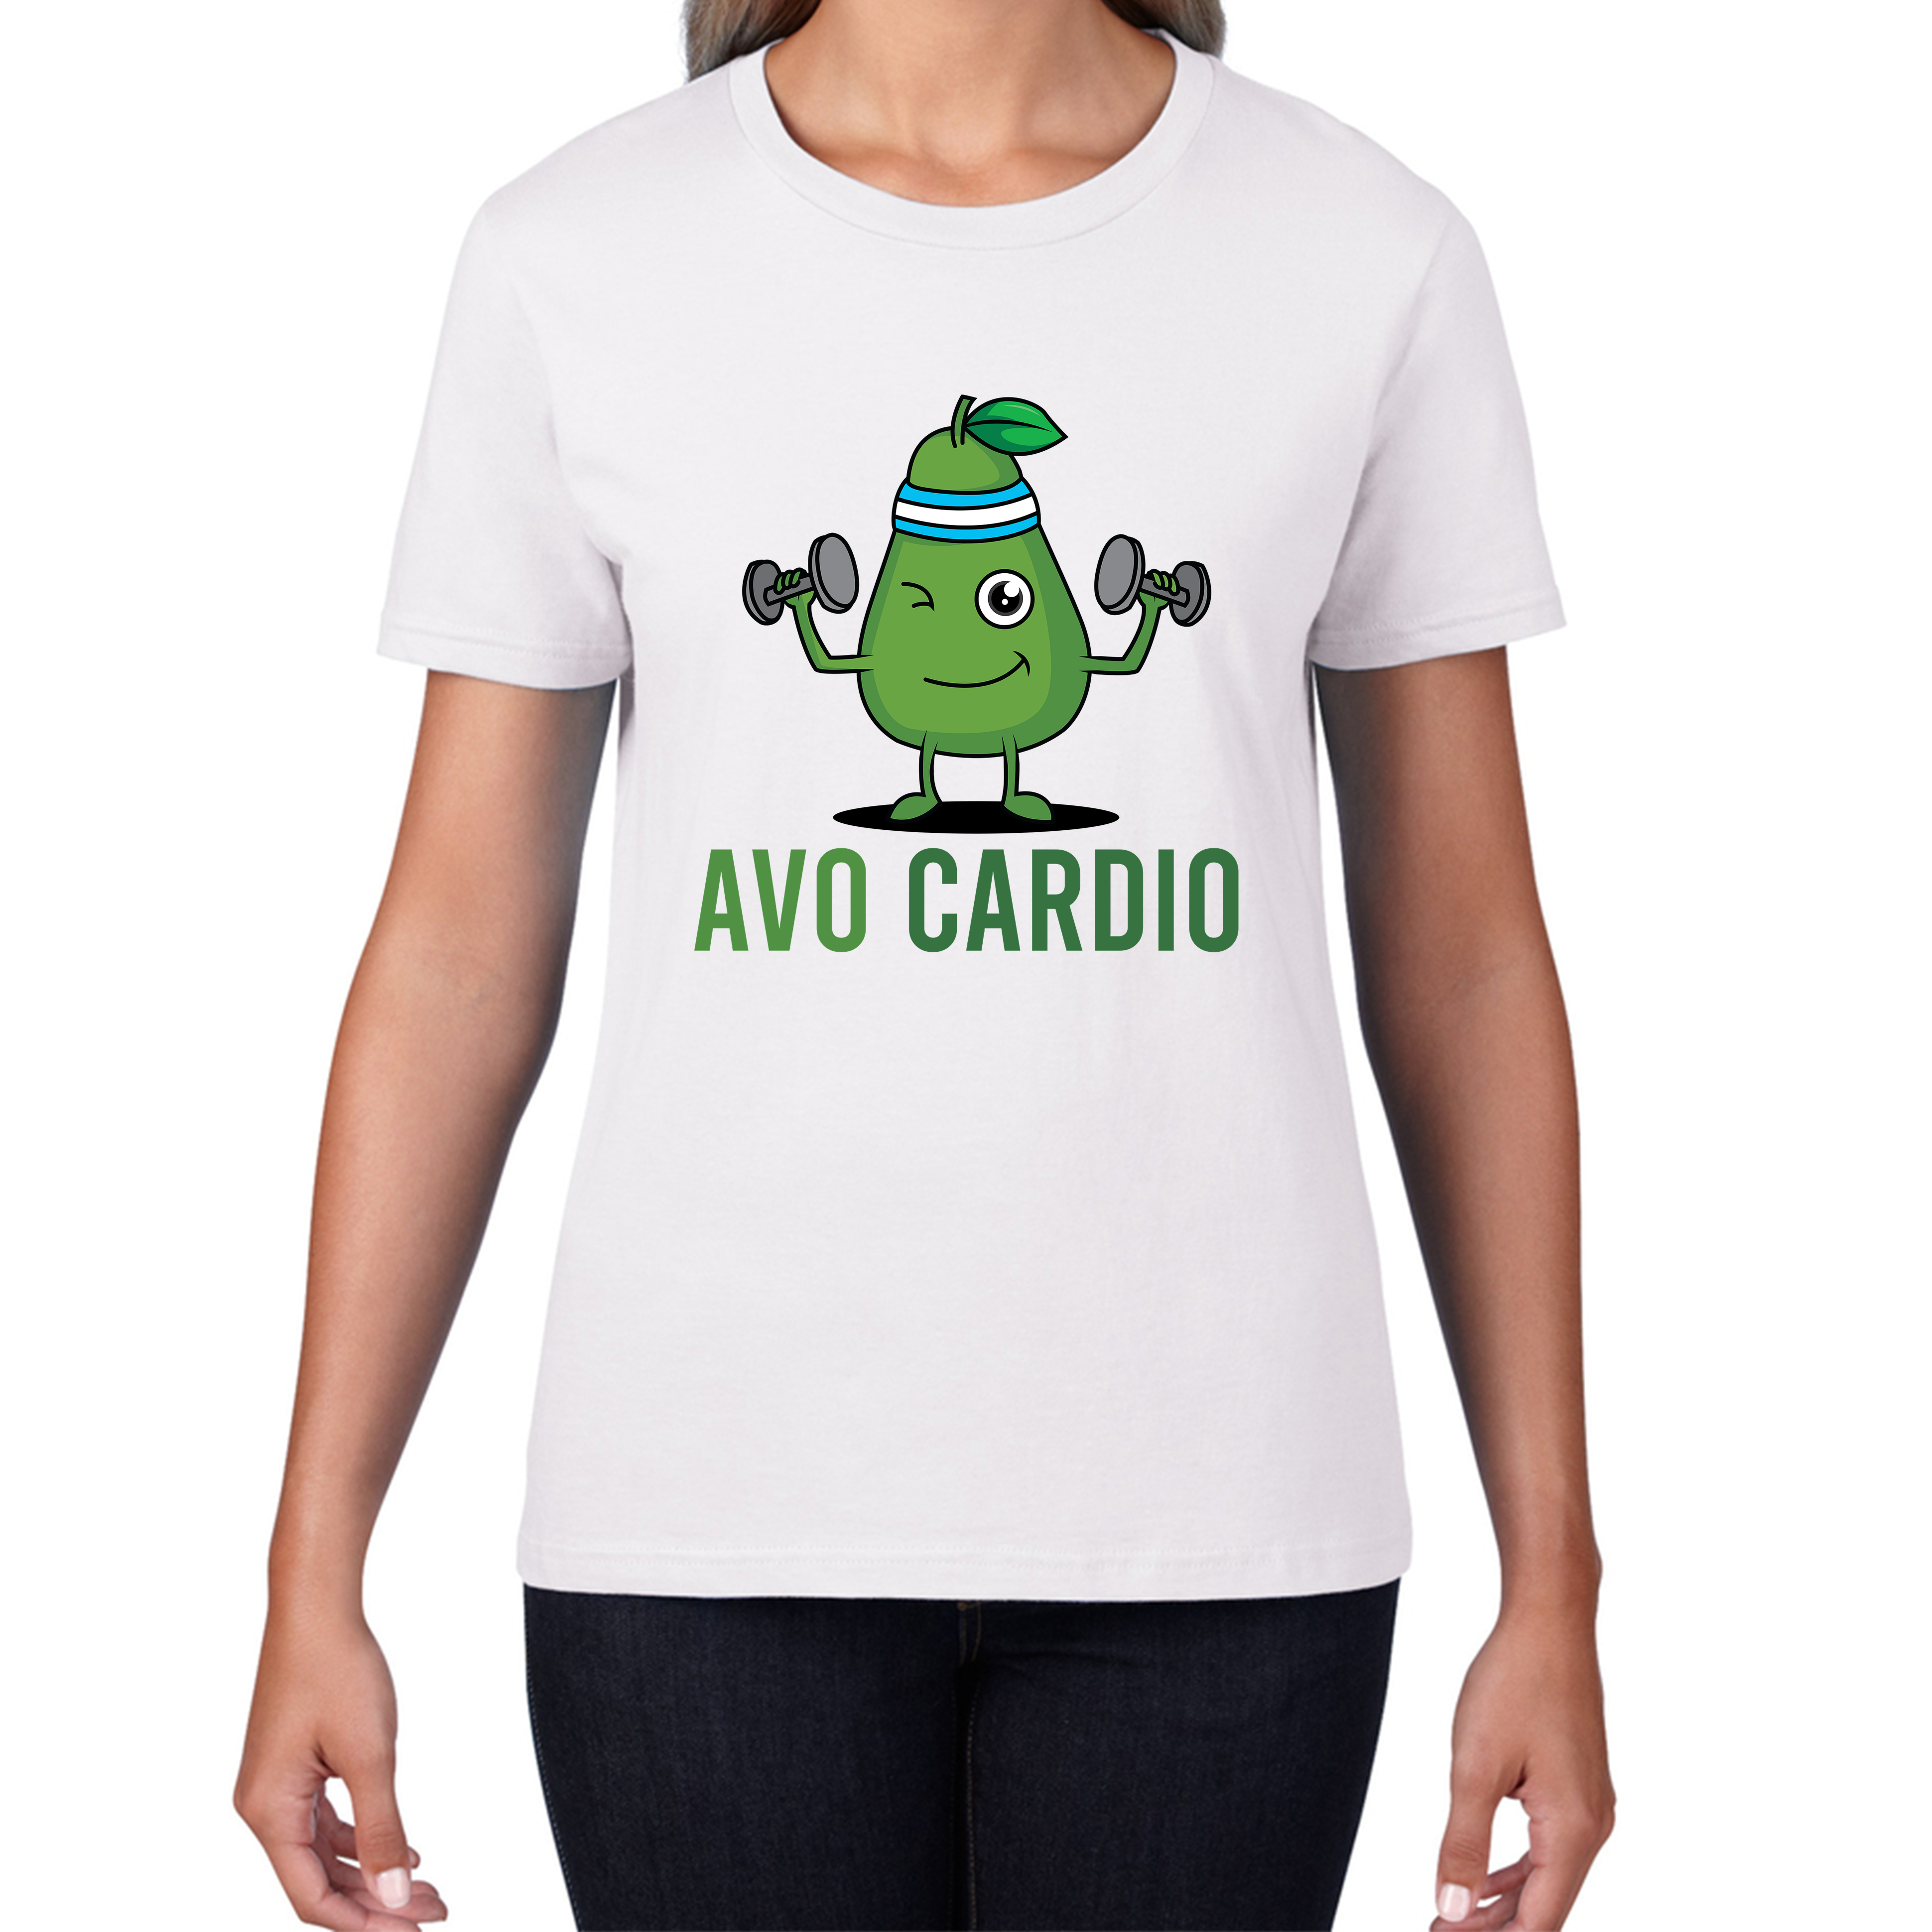 Avo Cardio Funny Avocado Fitness Ladies T Shirt